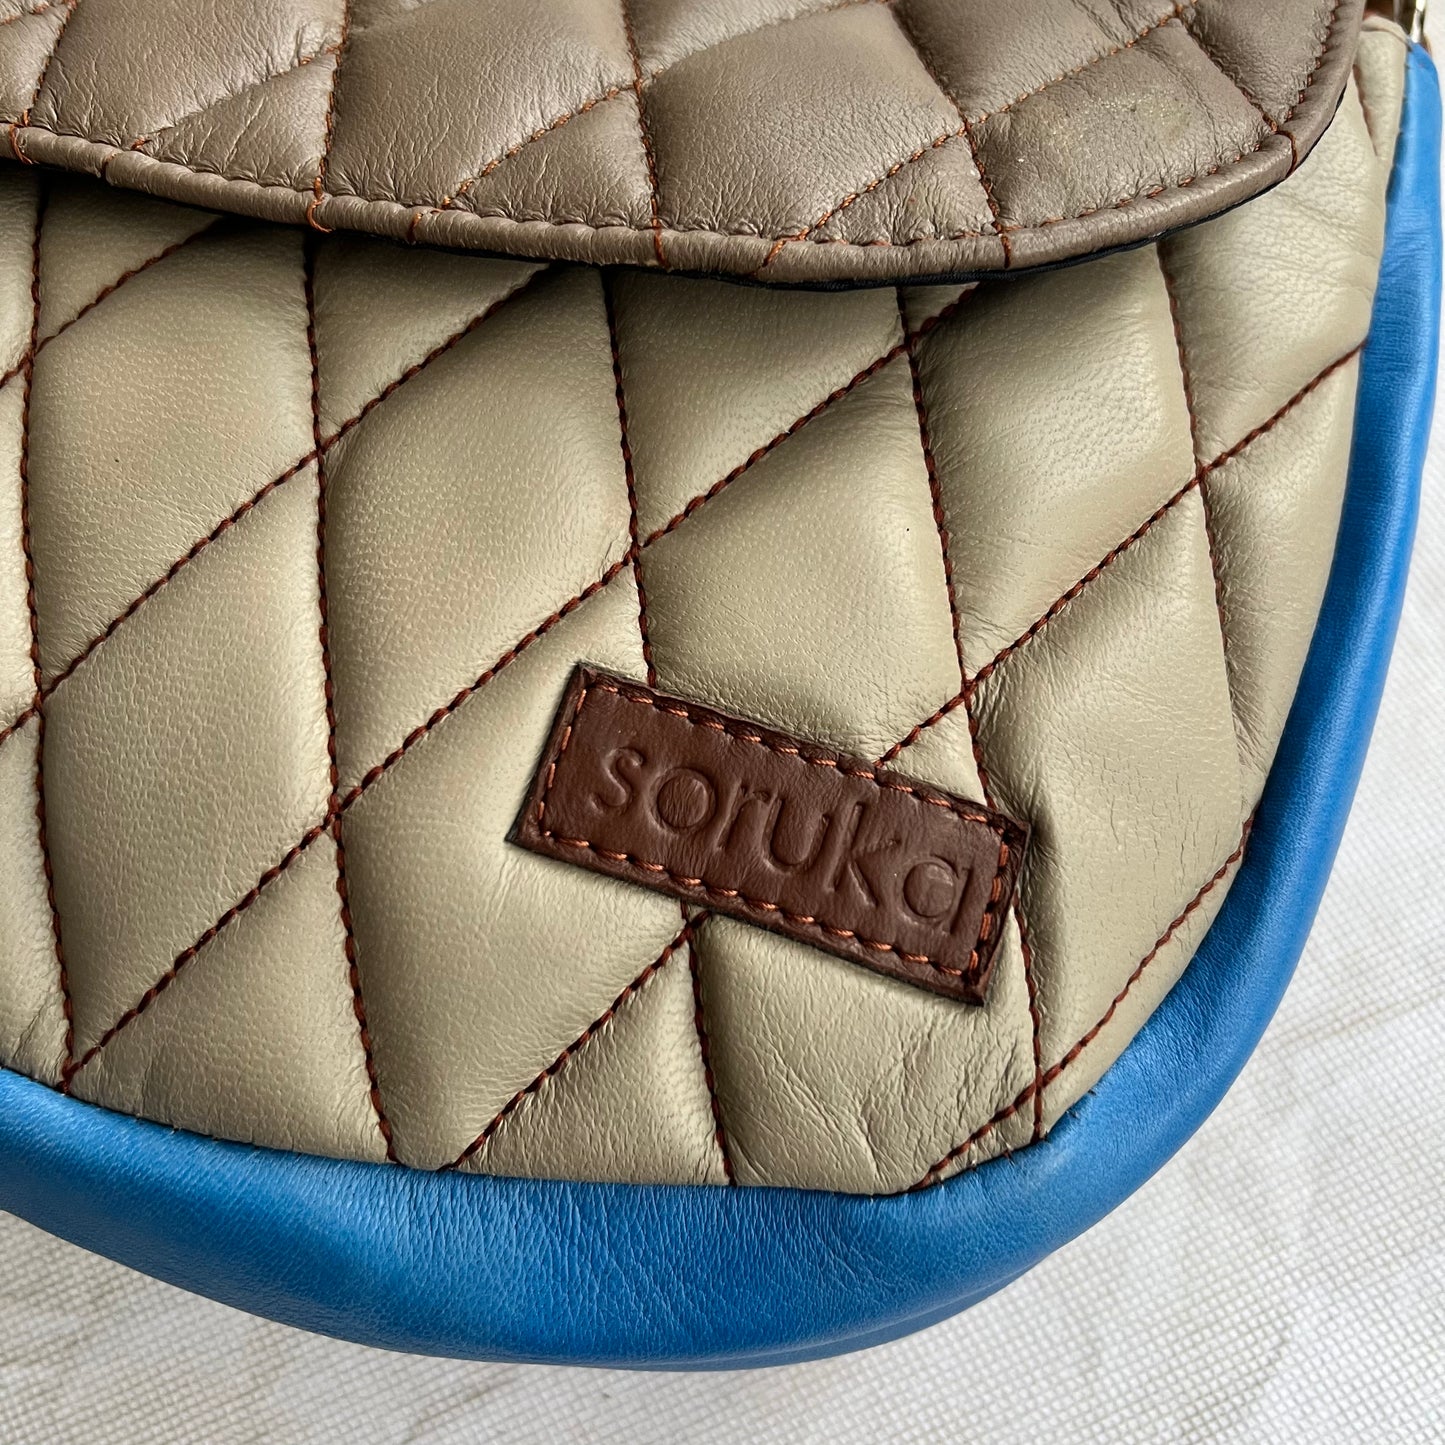 close-up of corner of bag with "soruka" logo patch.